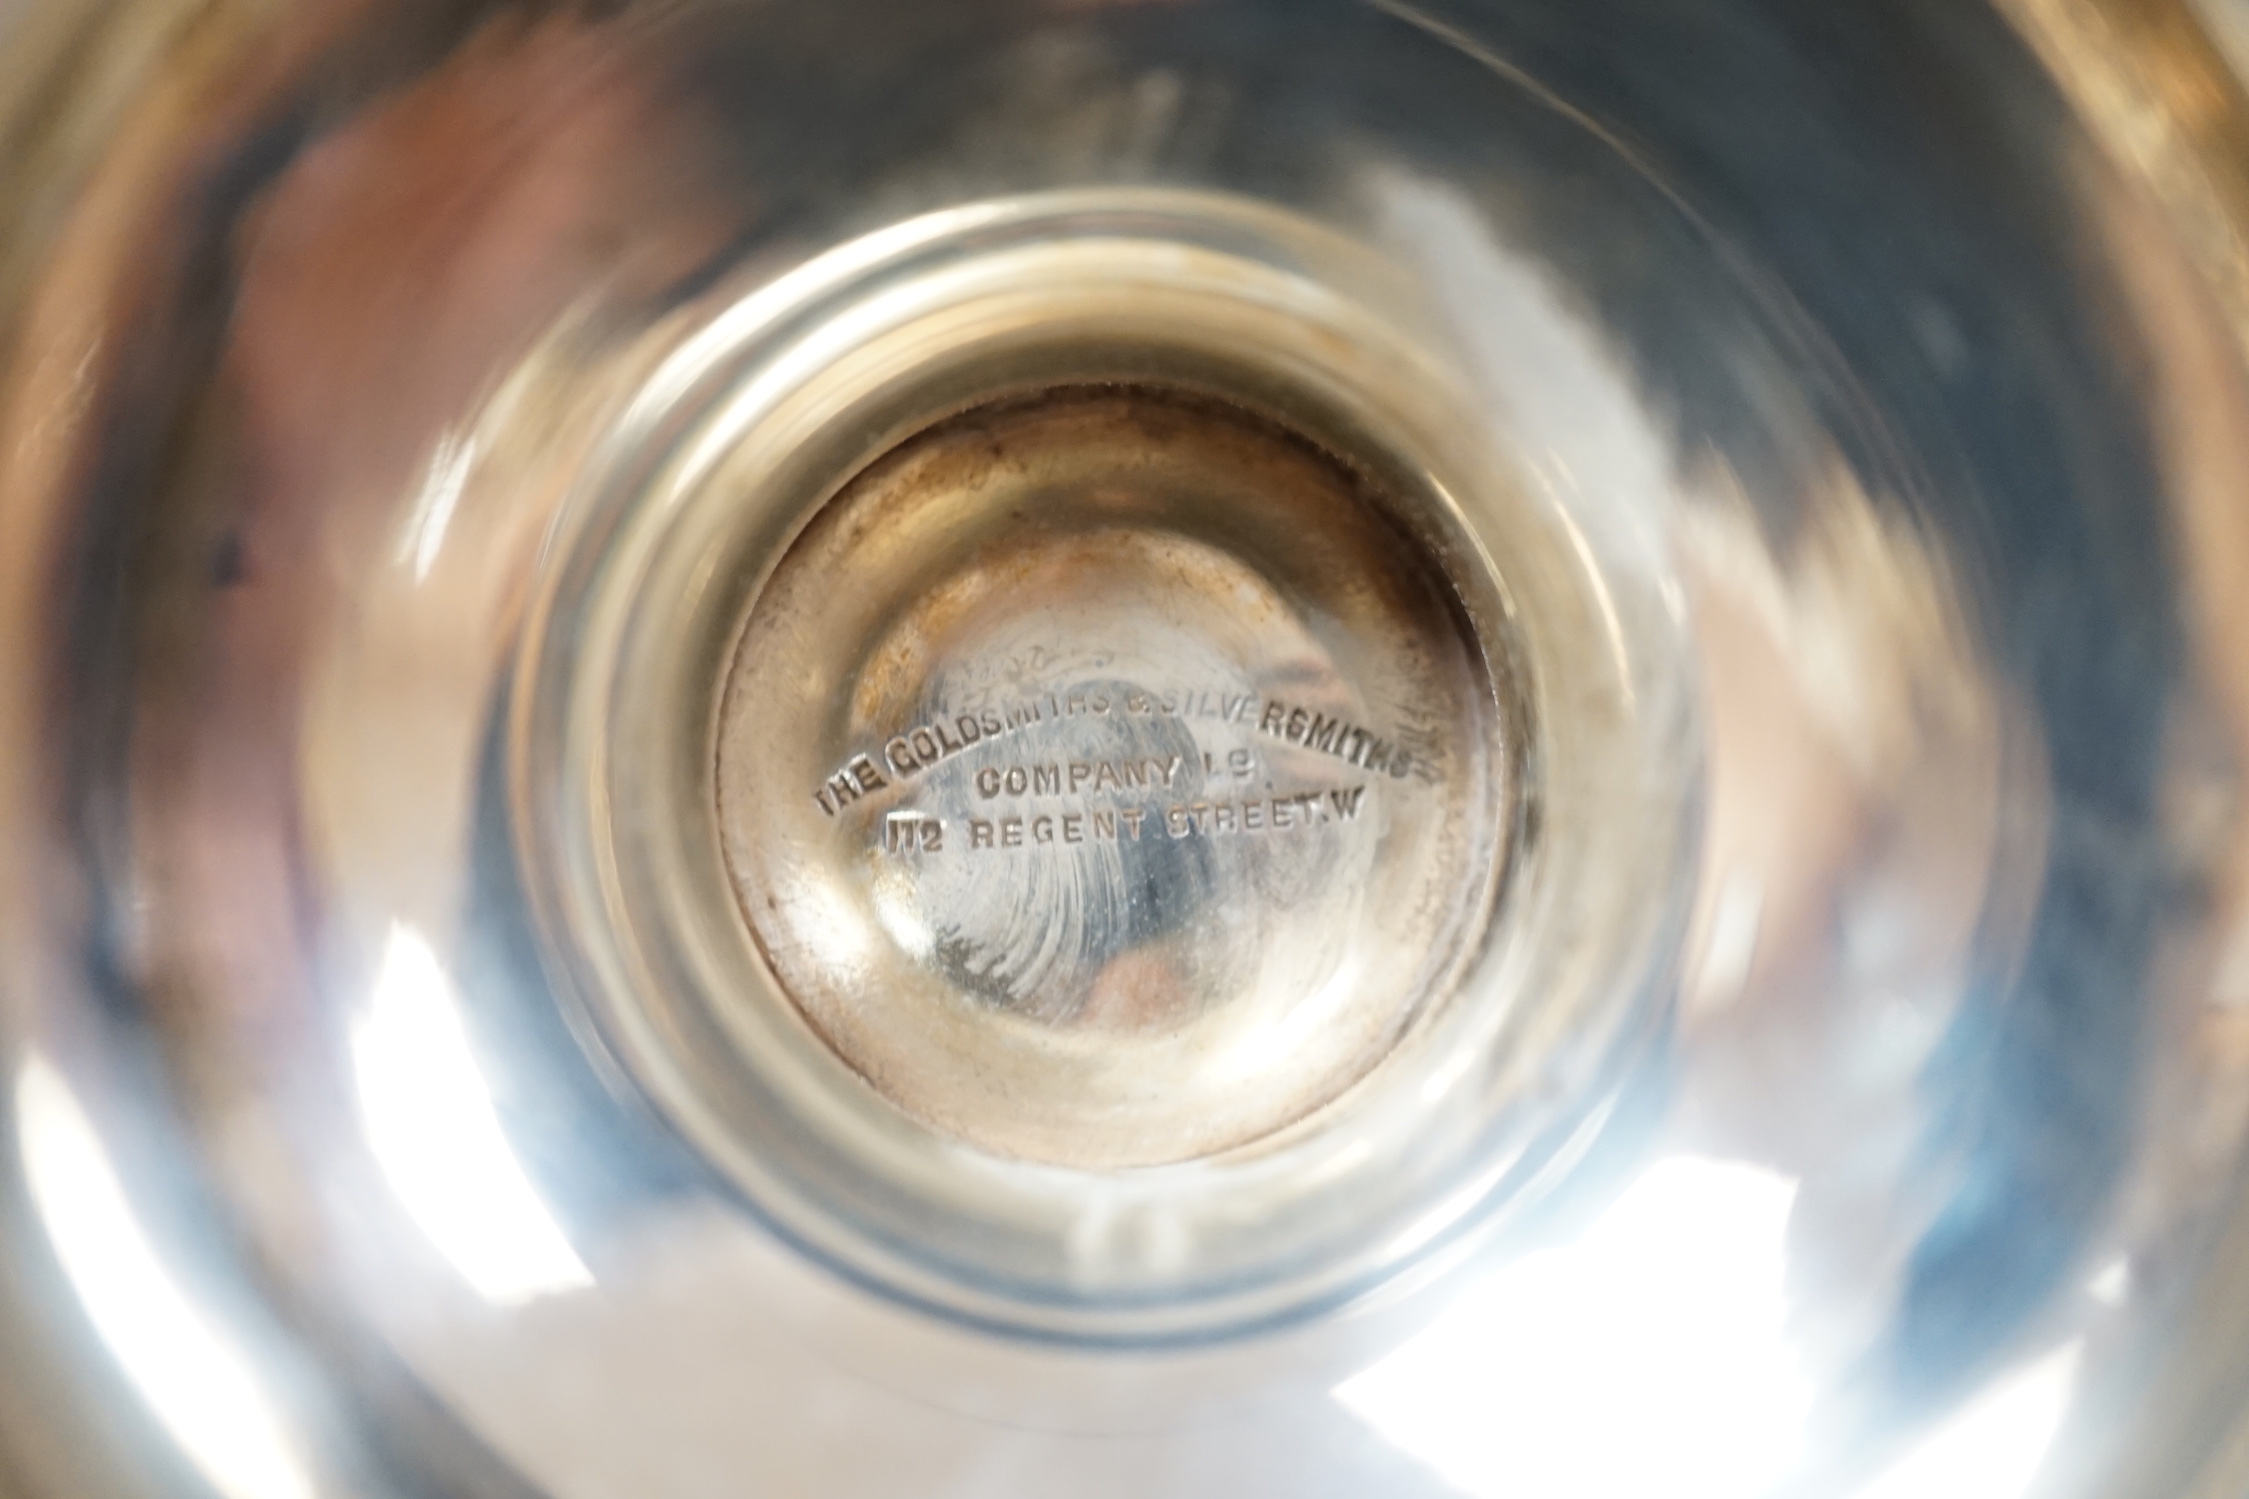 A George V silver two handled vase, Goldsmiths & Silversmiths Co Ltd, London, 1932, 16.2cm, 10oz and a spill vase.